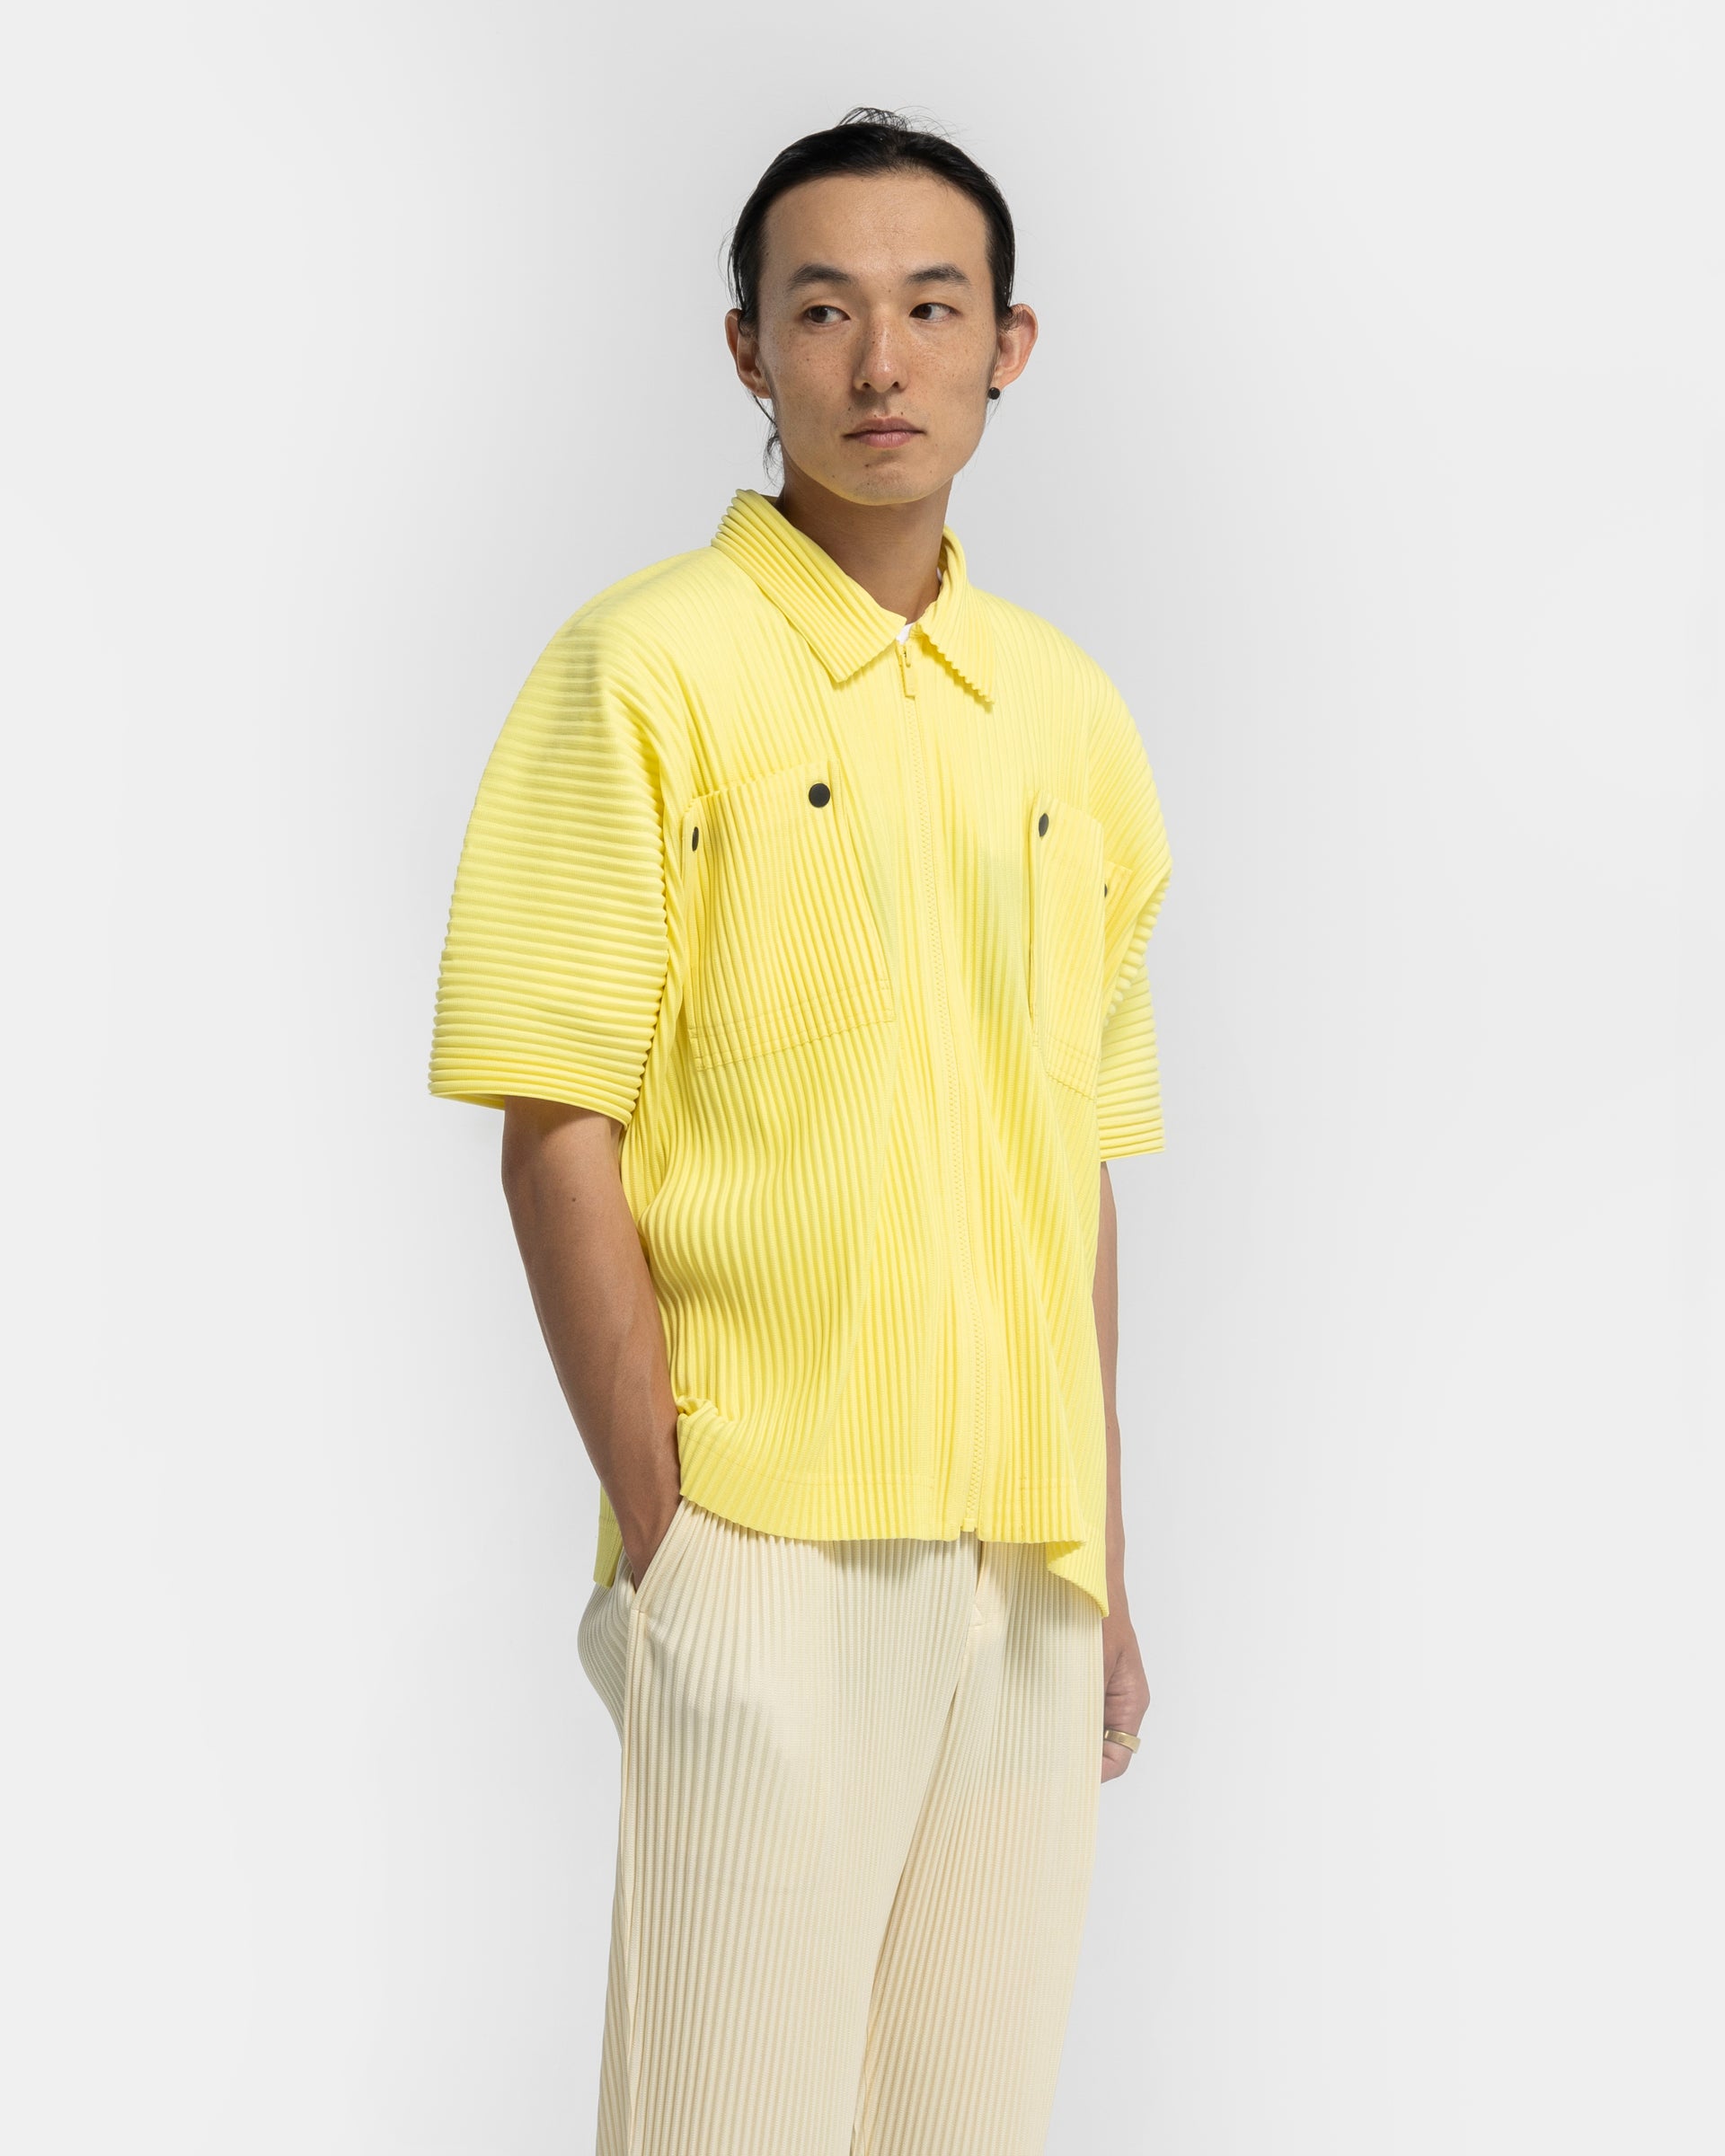 Flip Shirt in Spring Yellow